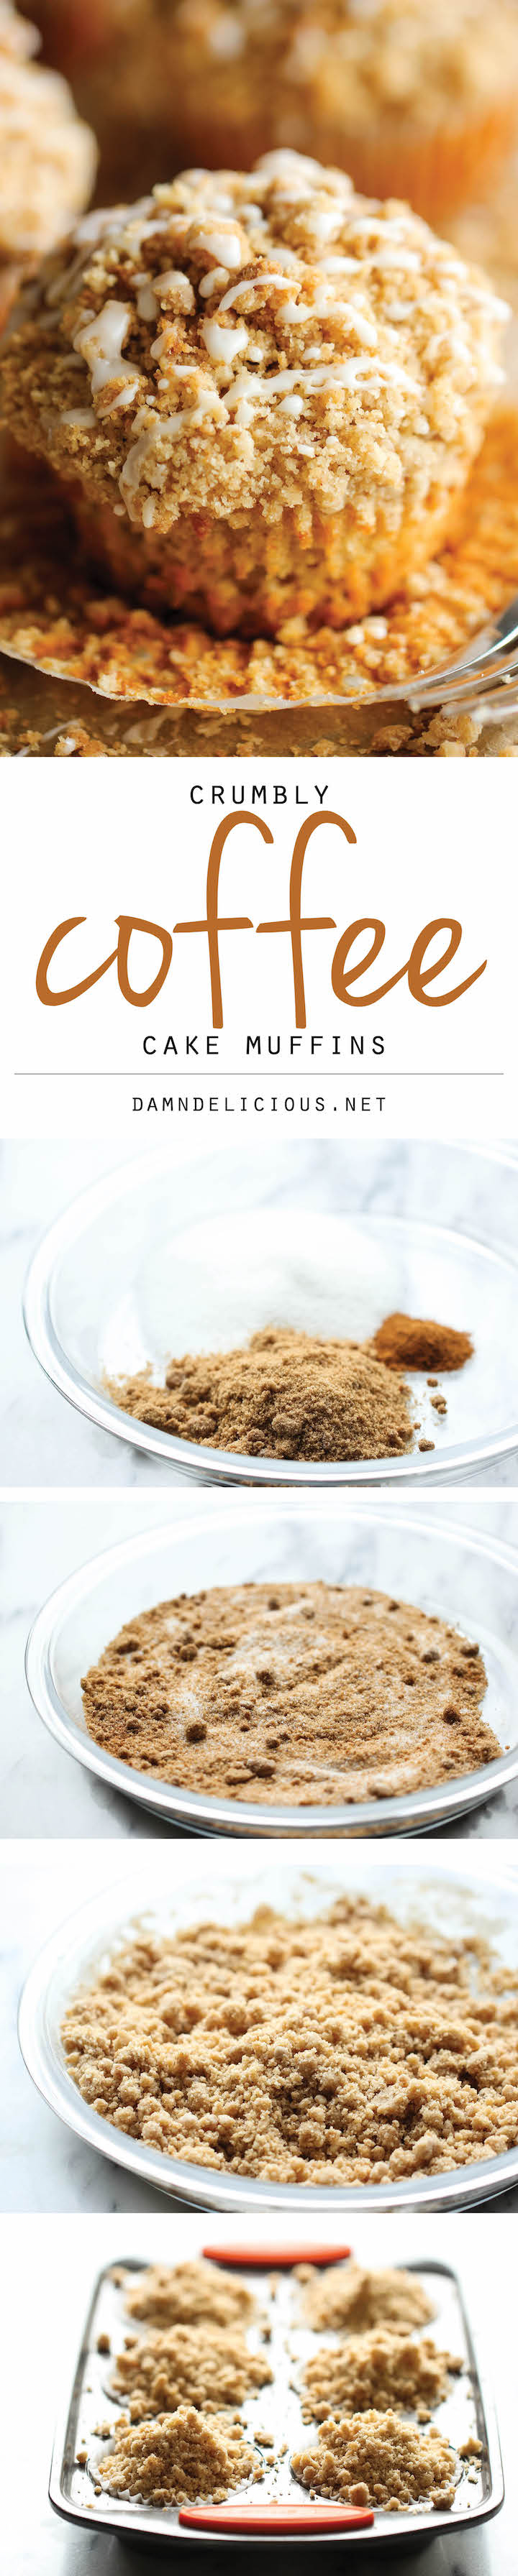 coffee cake muffins